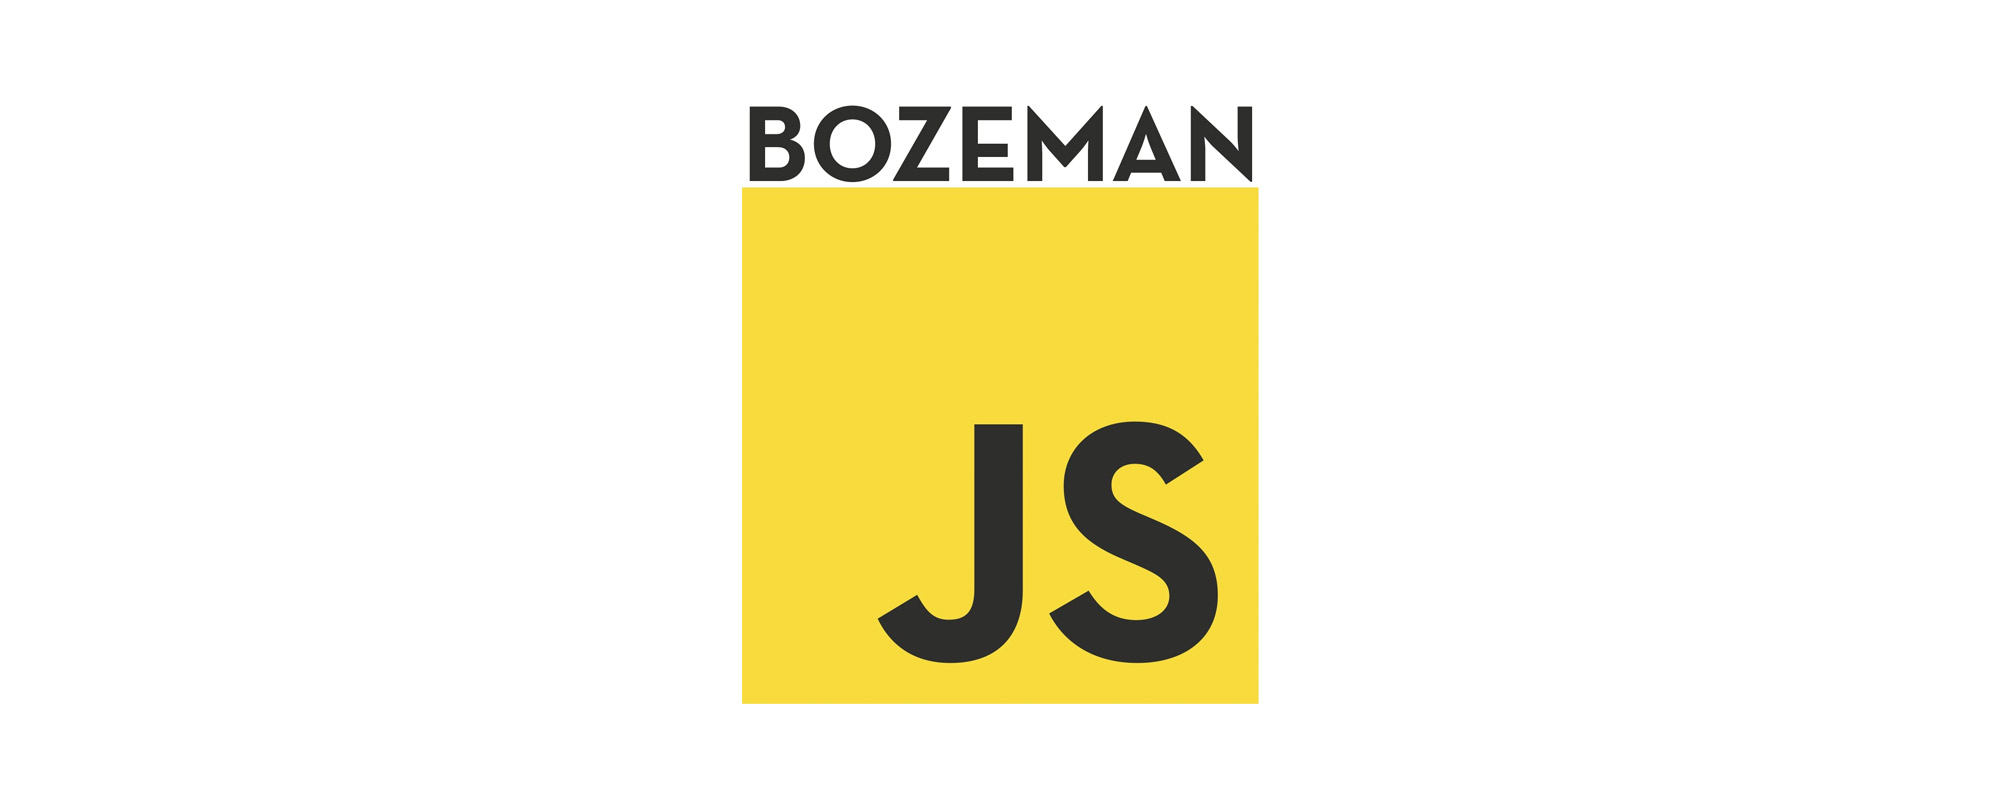 Bozeman Javascript Meet-up